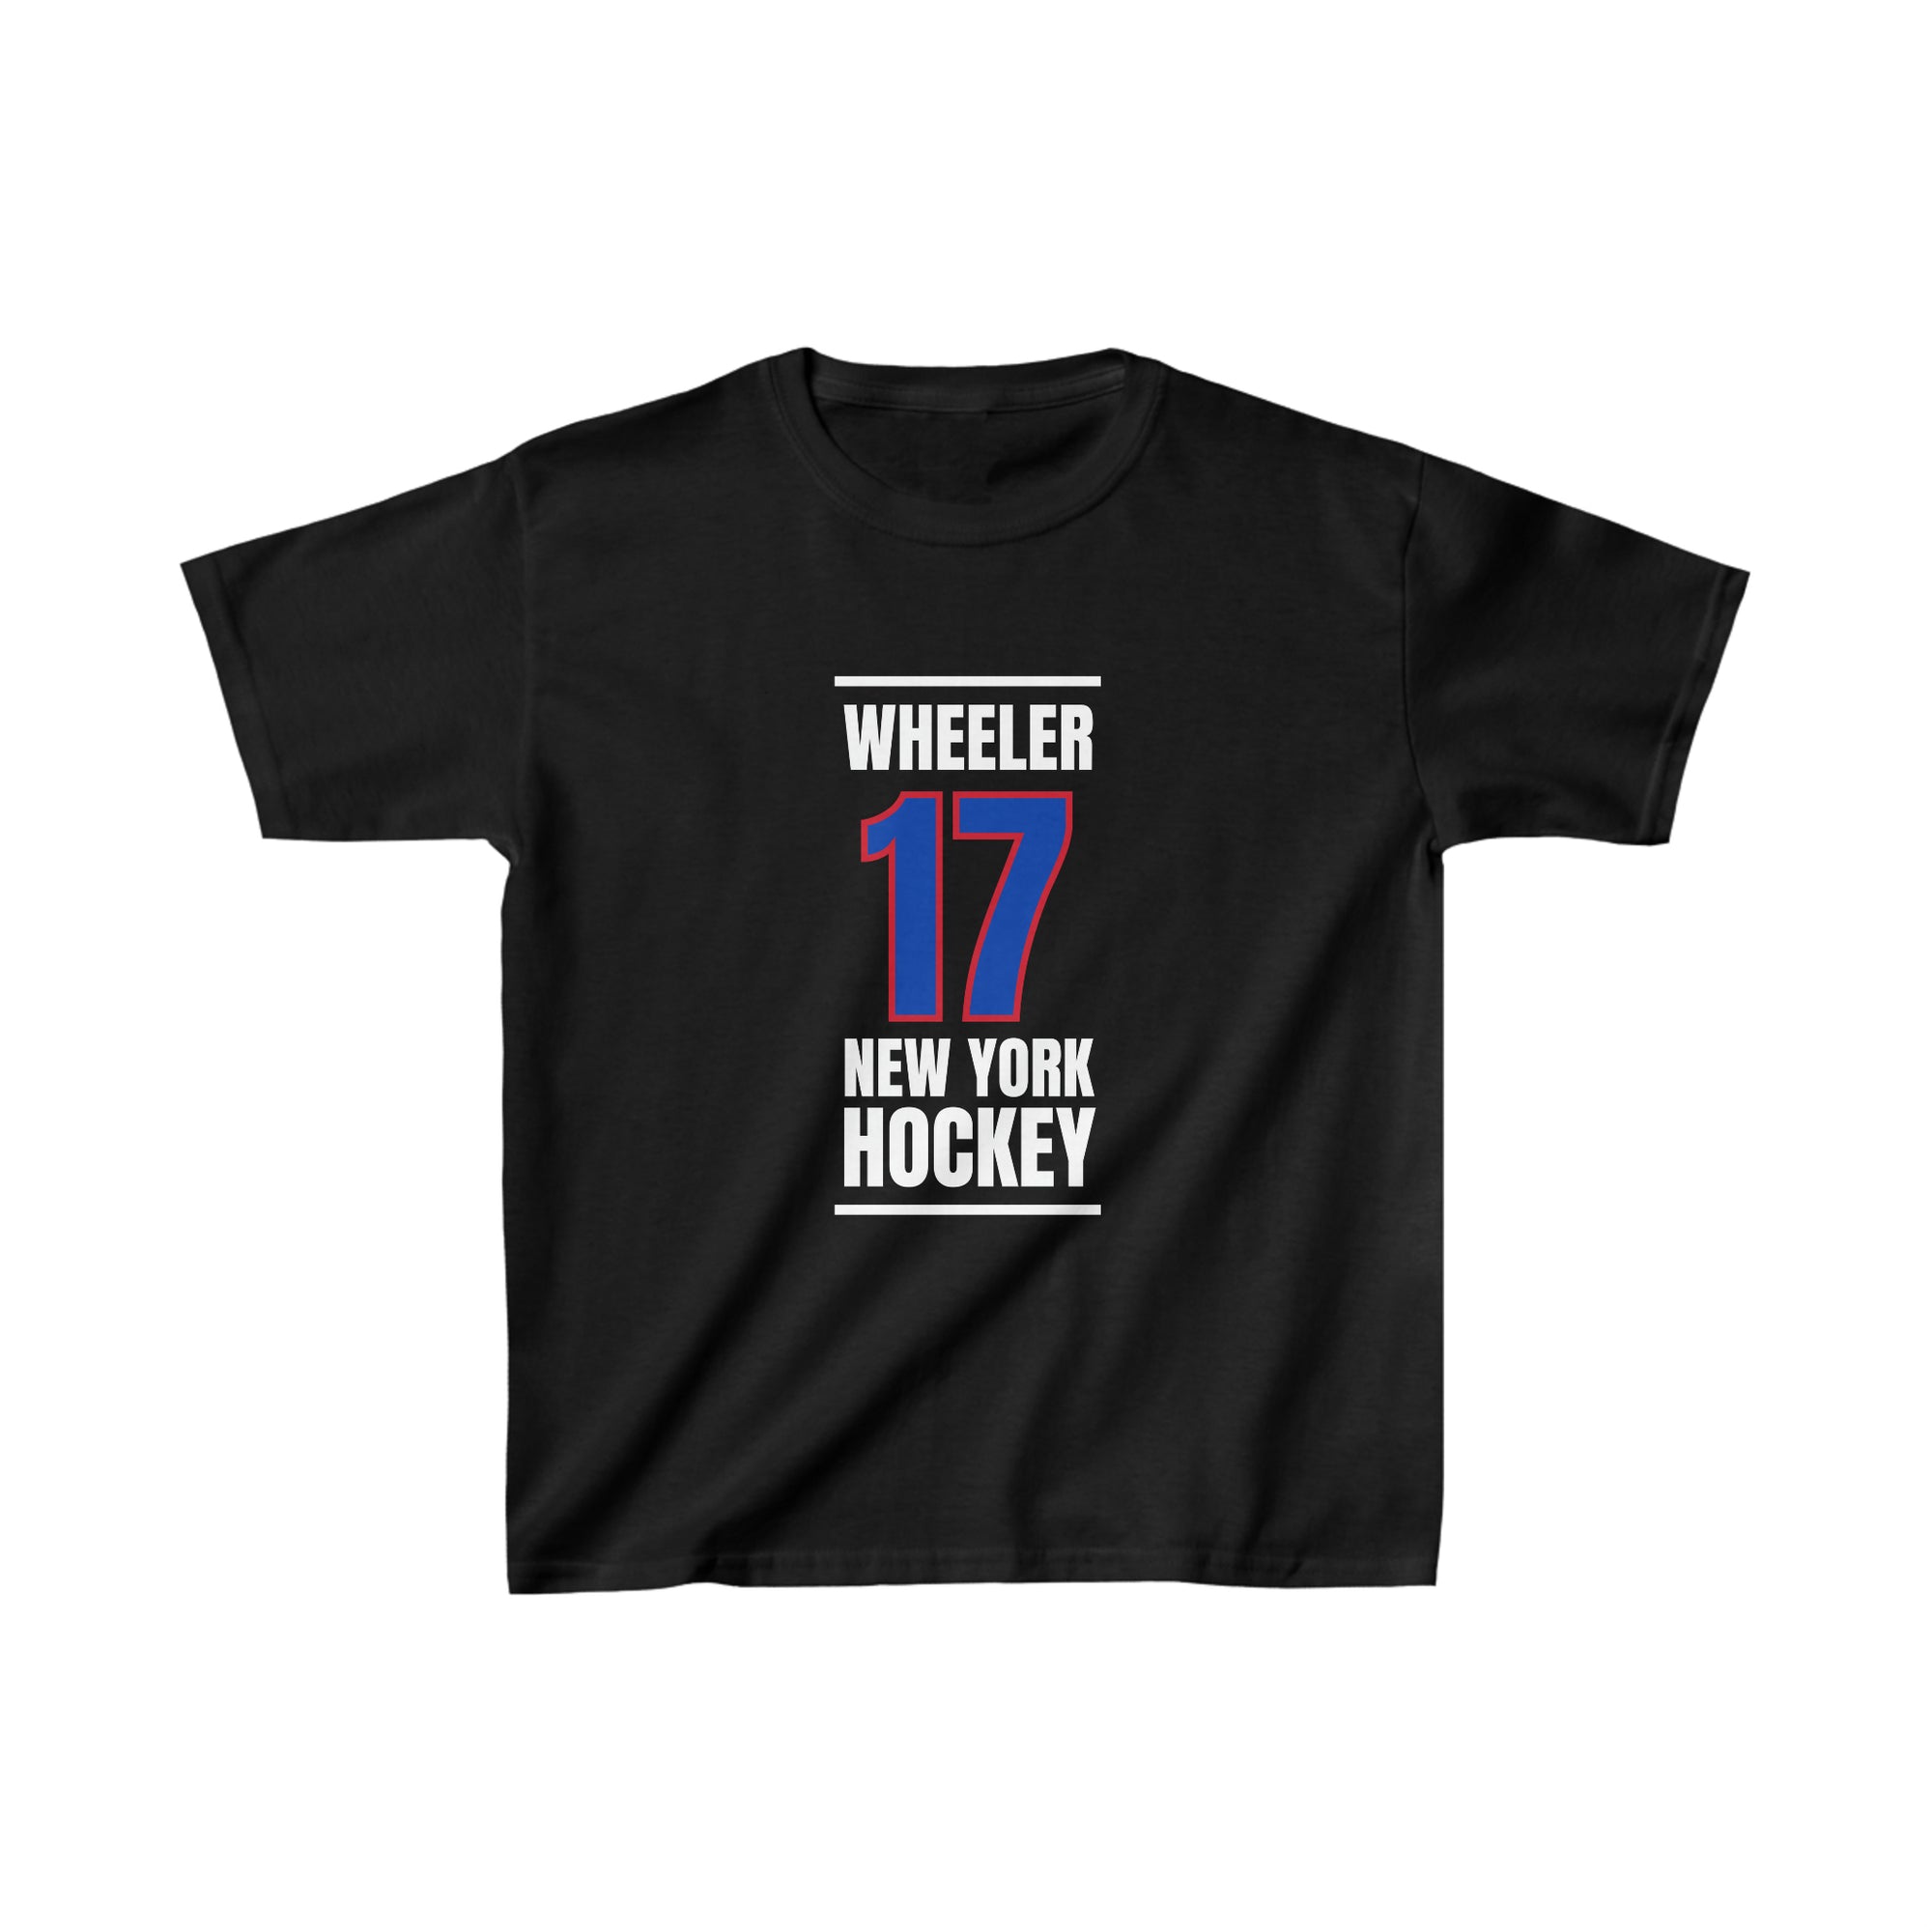 Wheeler 17 New York Hockey Royal Blue Vertical Design Kids Tee